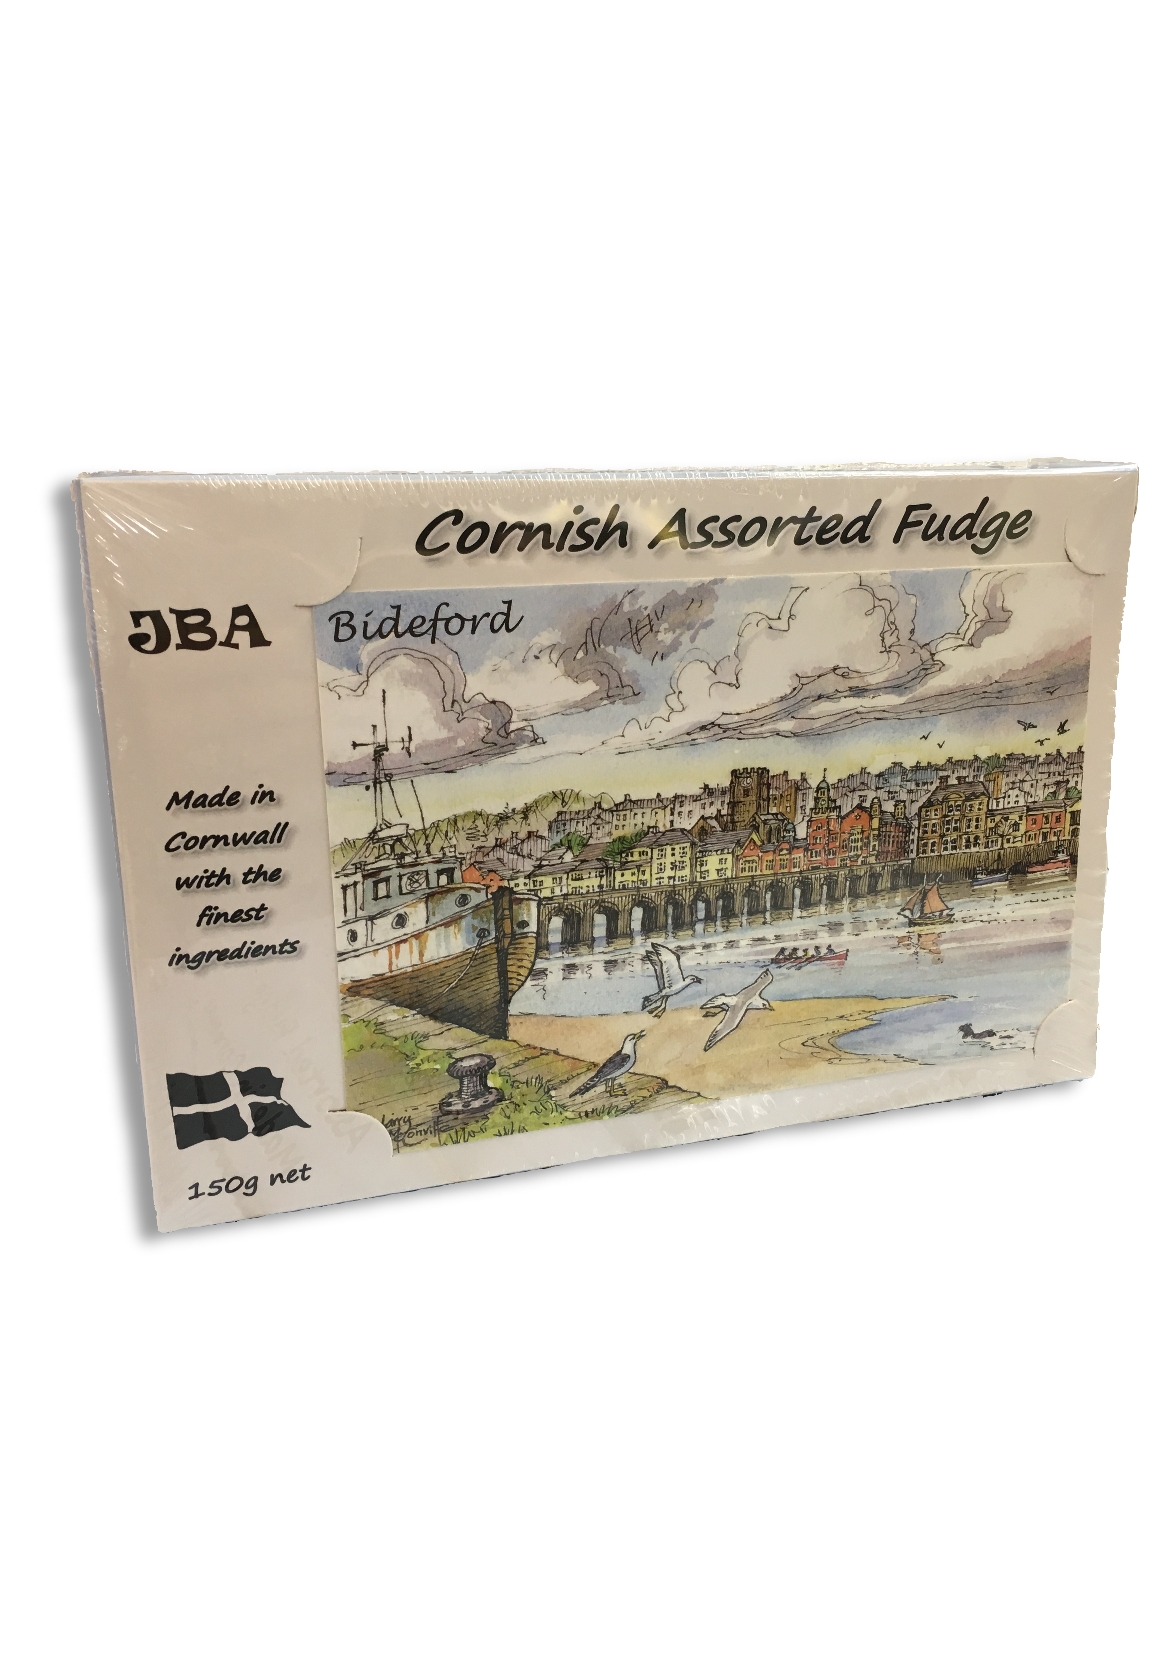 150g Made in Cornwall Assorted Fudge Postcard Box